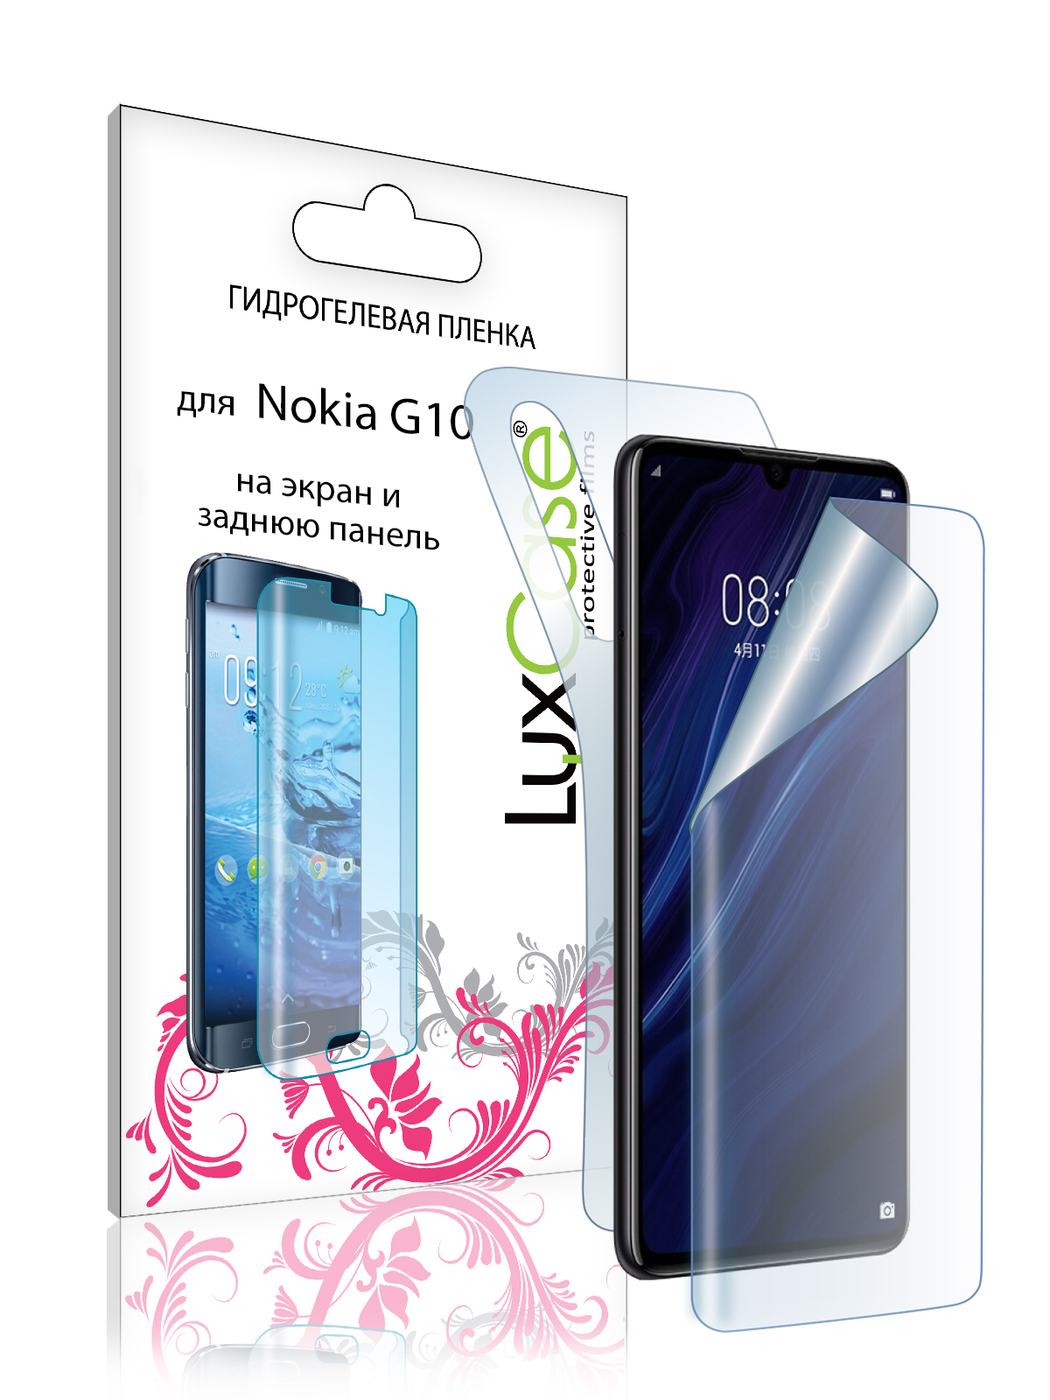 Пленка гидрогелевая LuxCase для Nokia G10 Front and Back Transparent 86391 гидрогелевая пленка luxcase для nokia g20 front transparent 86392